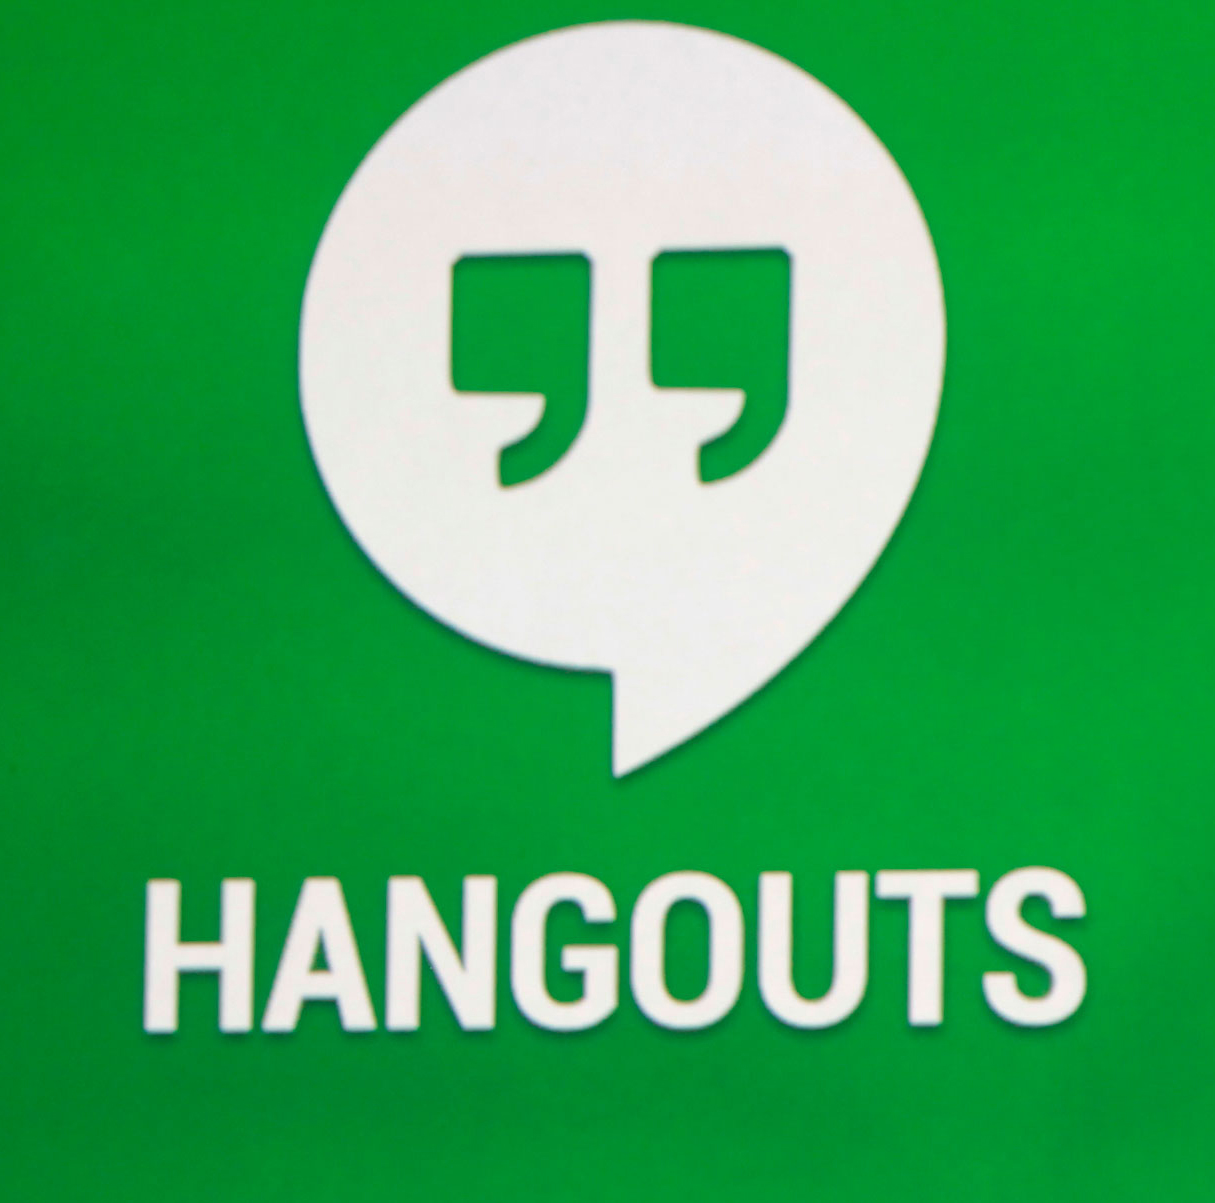 Google Hangout Mac Os X Download